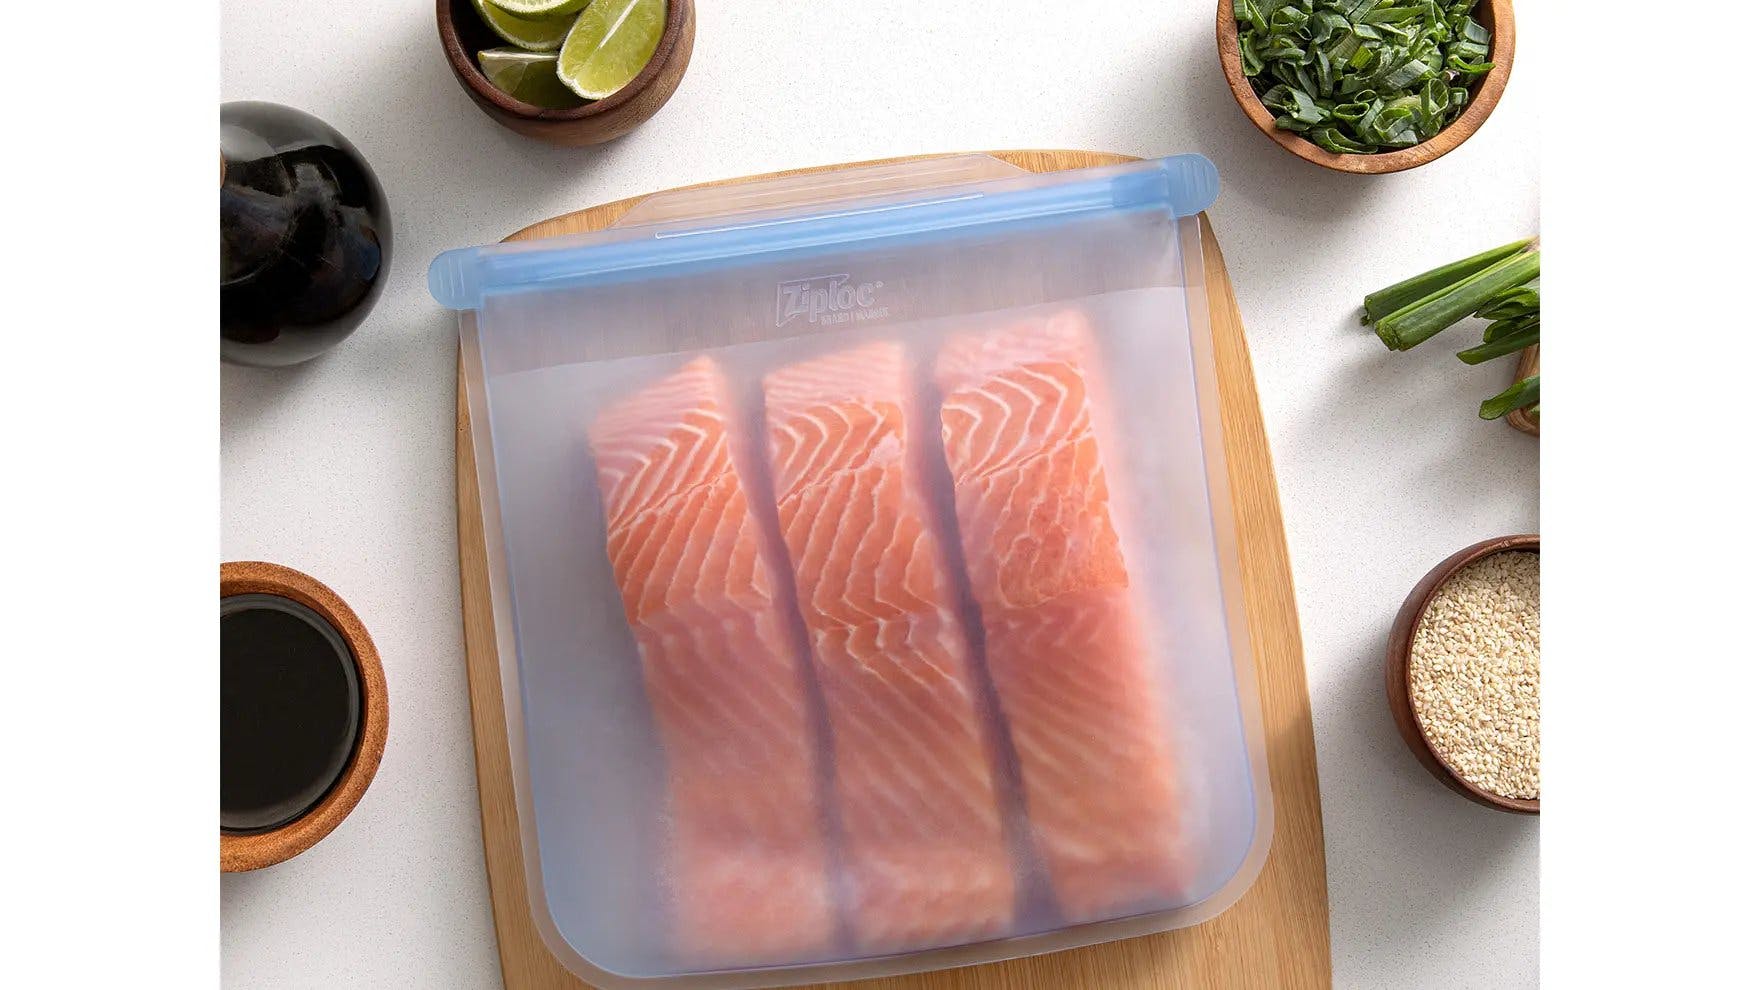 Salmon filets in Ziploc Endurables pouch on cutting board